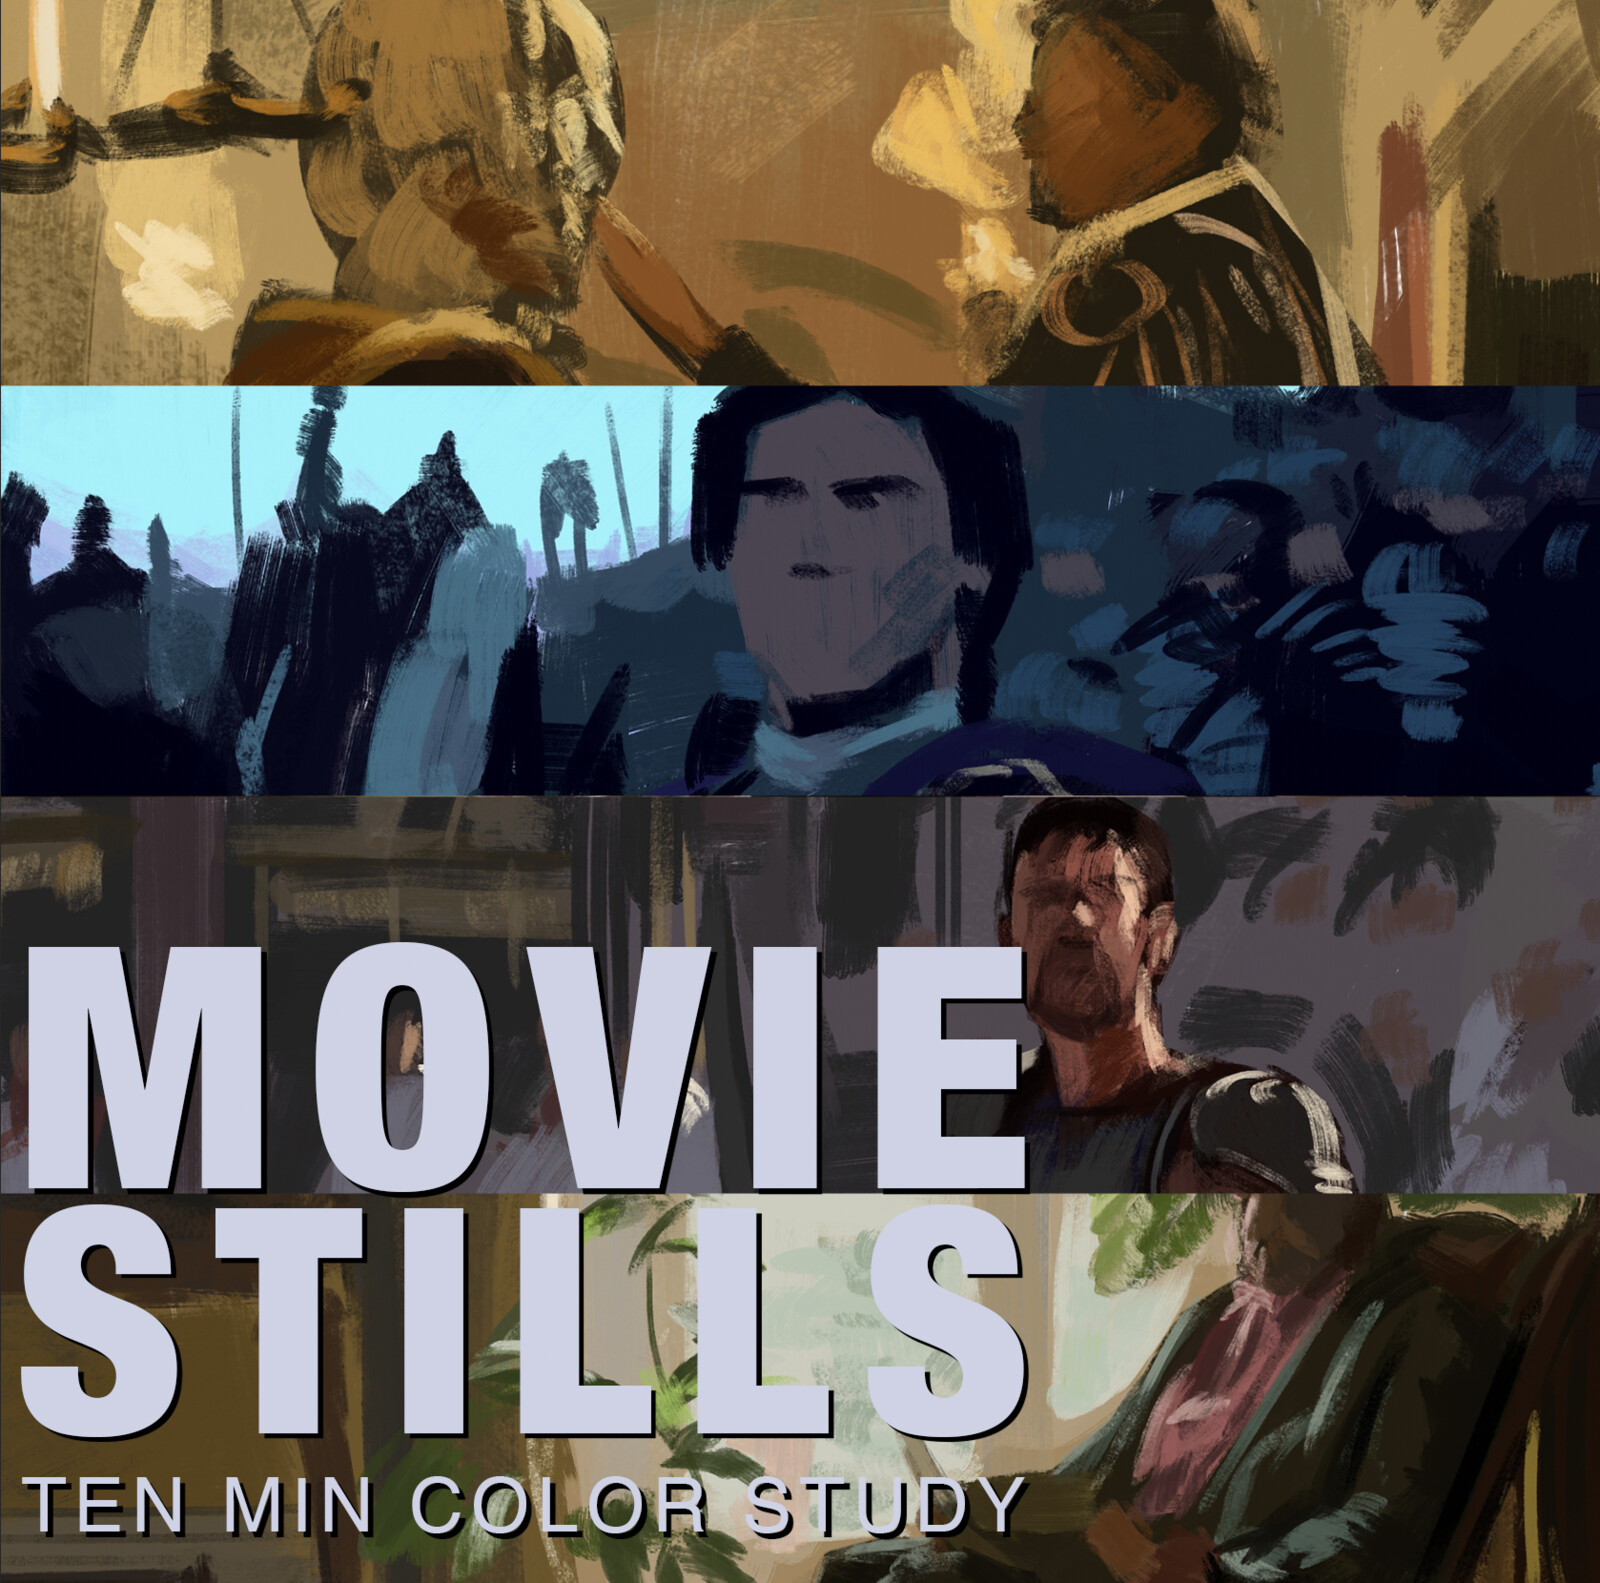 10 min color studies from movie stills